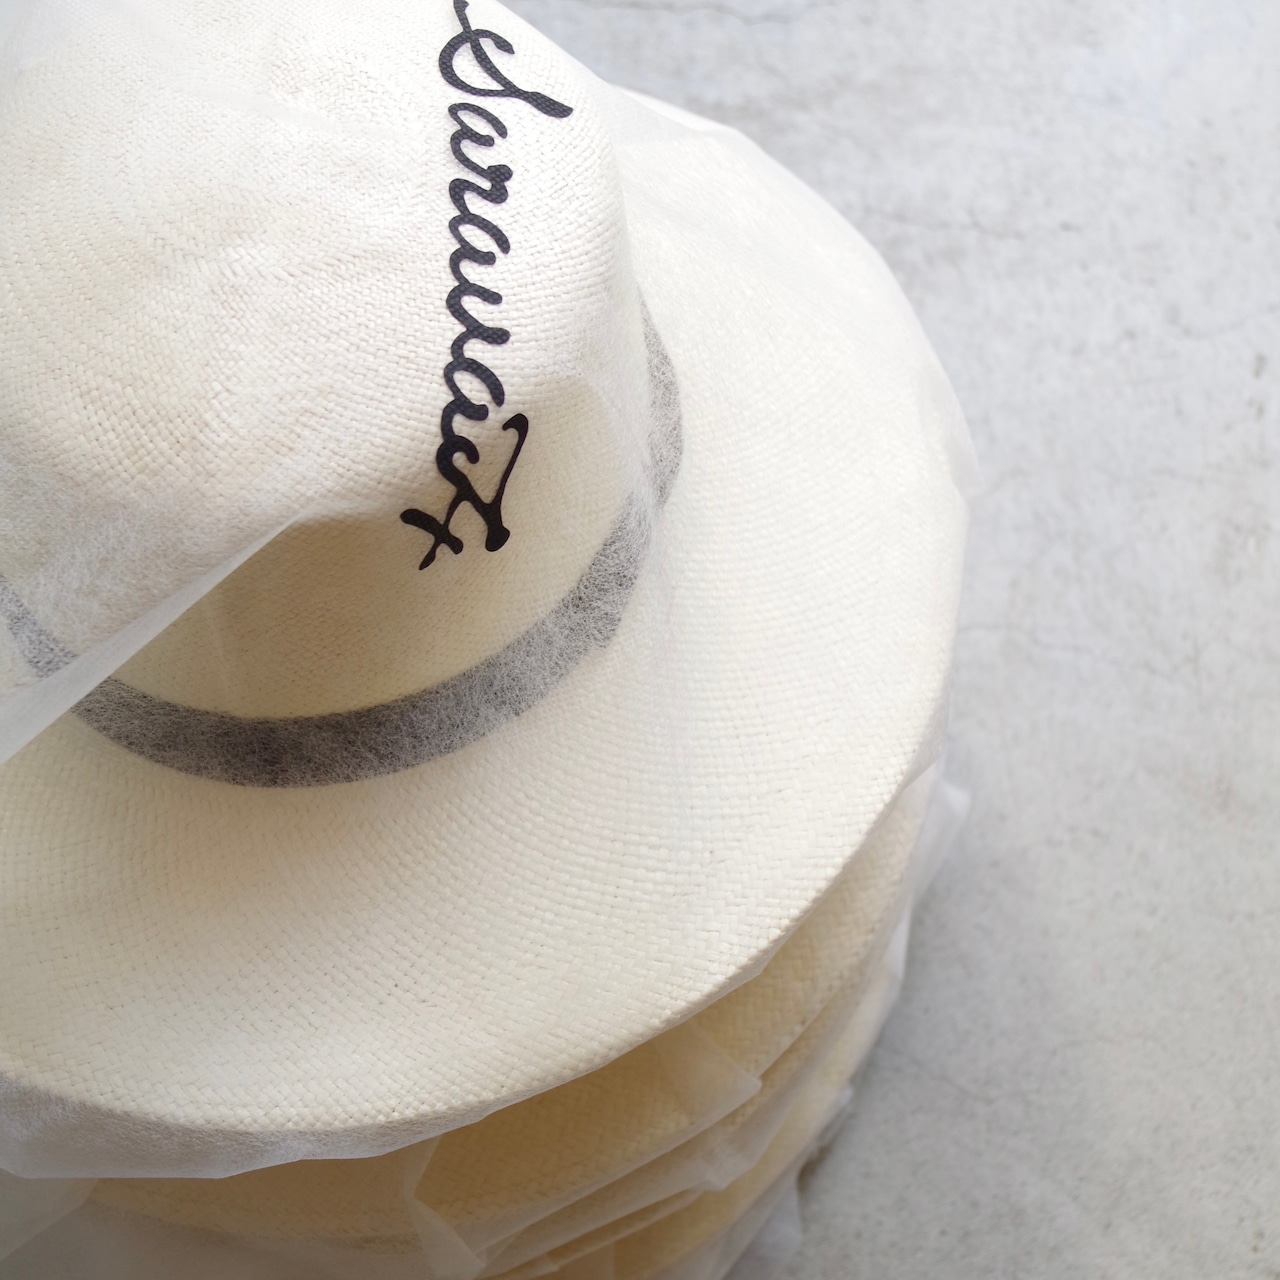 SINME  × Saravah Hat Panama hat   Size 57.58.59